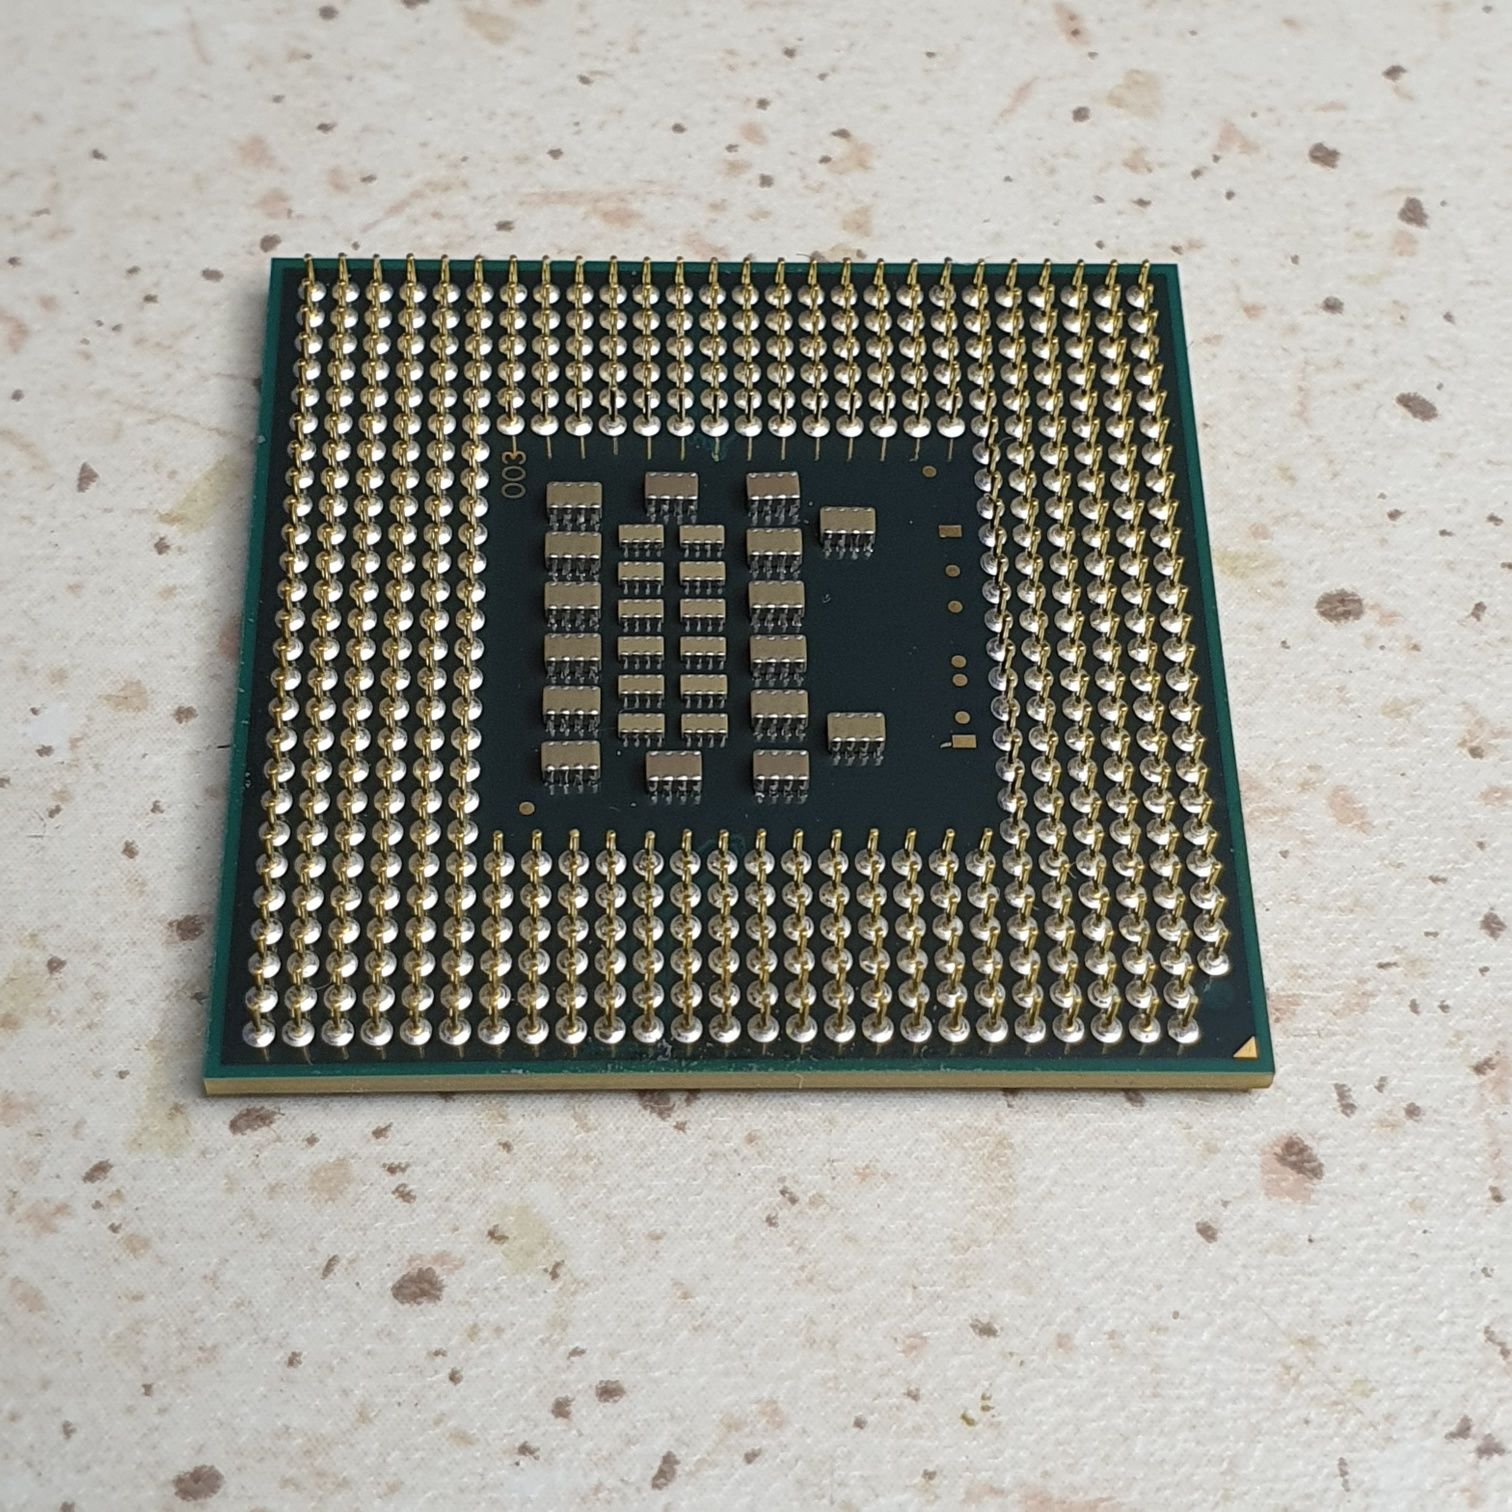 Procesor Intel Celeron M 420 1,6GHz SL8VZ mPGA478